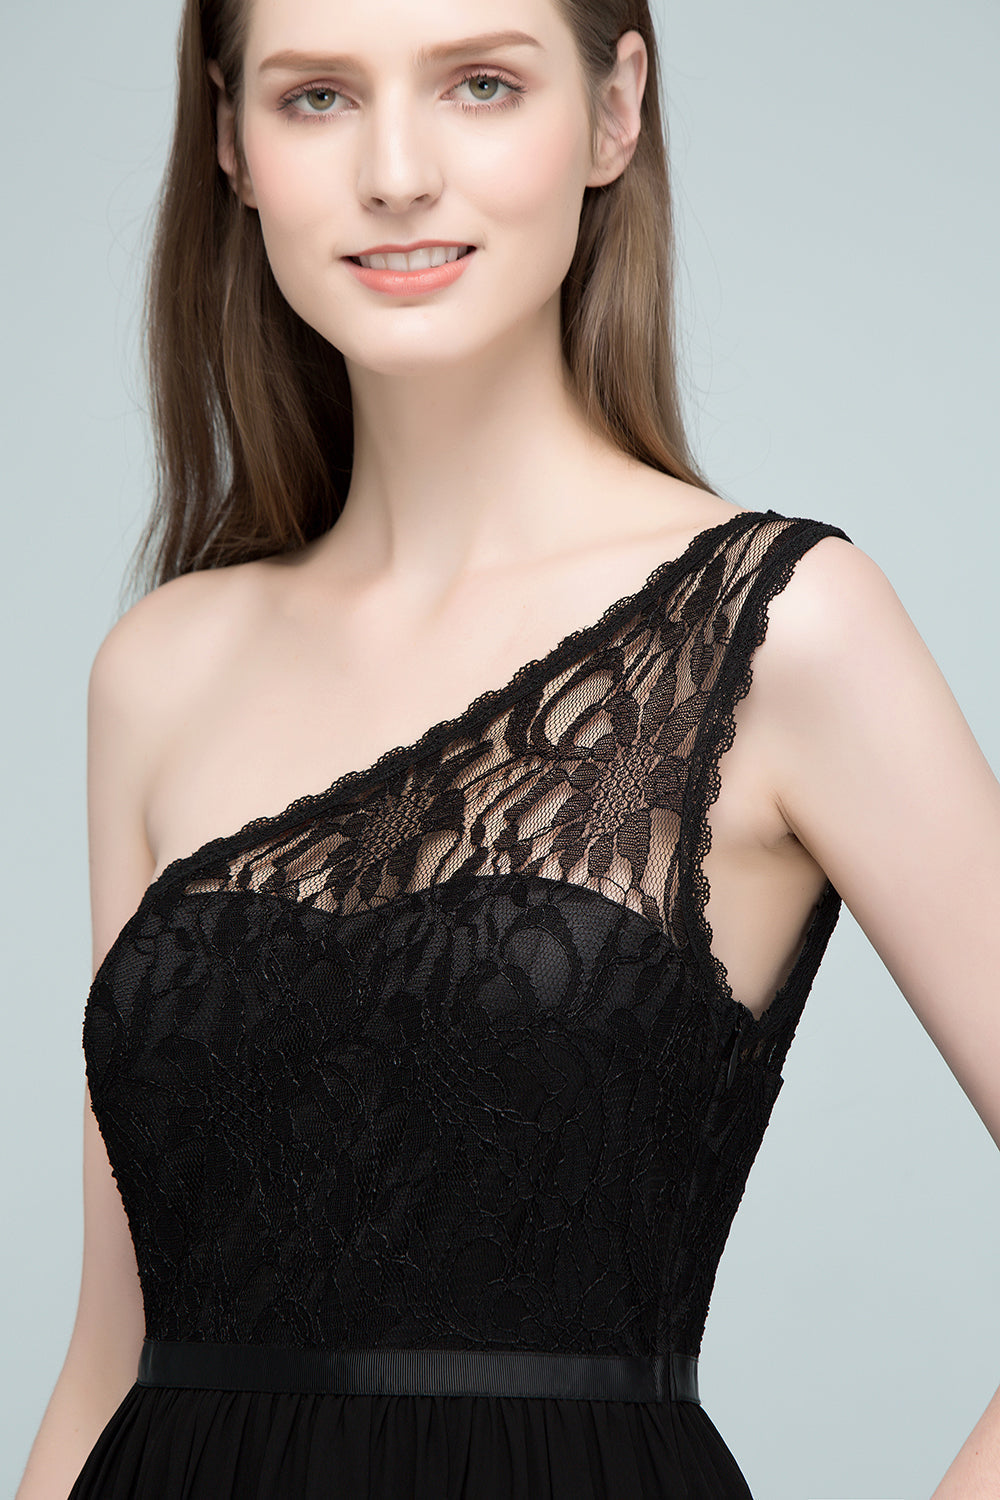 Stylish Black Chiffon One-Shoulder Lace Affordable Bridesmaid Dresses-27dress